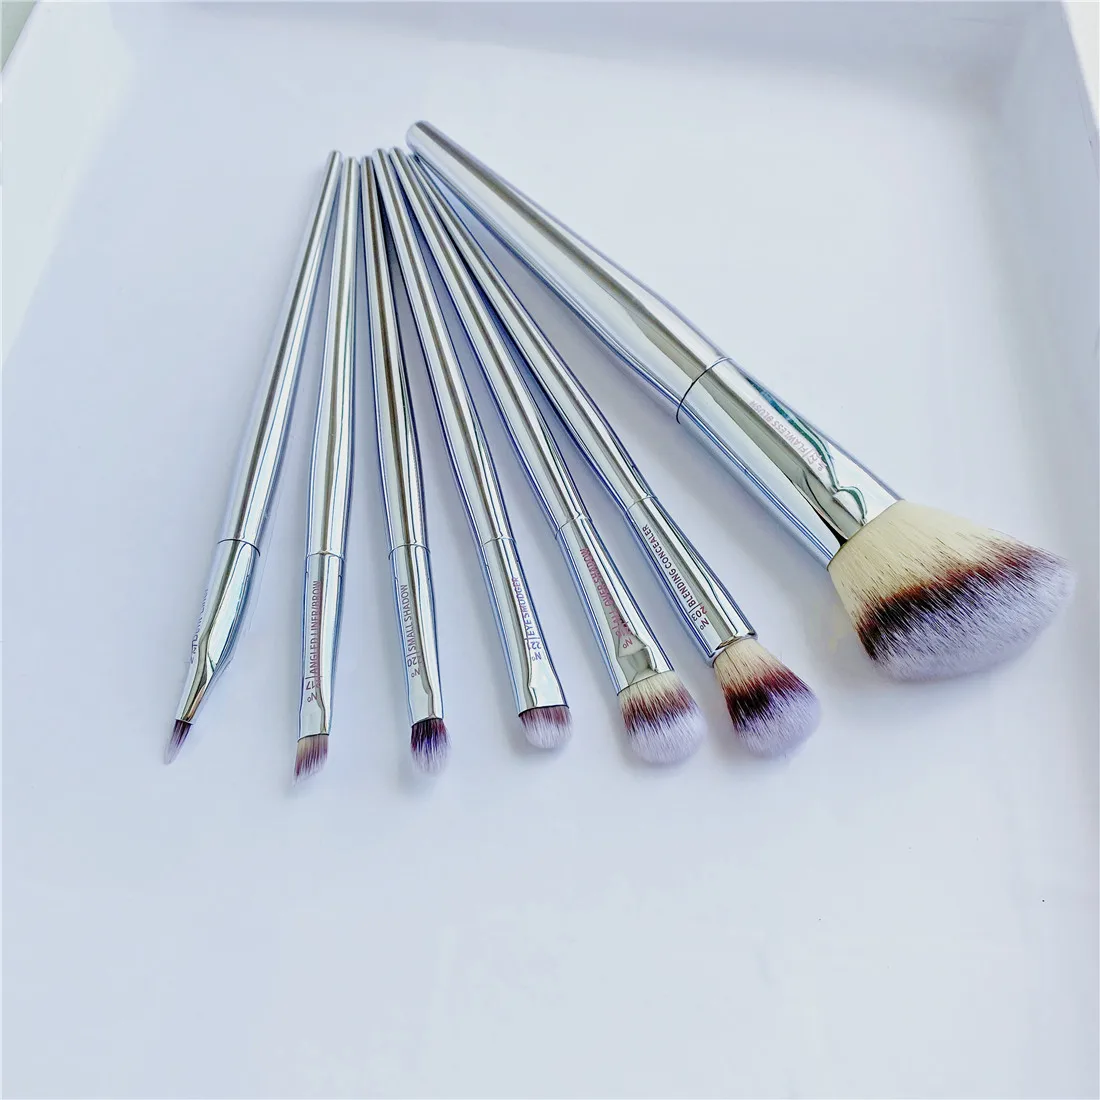 IT Makeup Brushes 7-Pcs Set  (227 203 216 217 218 220 221) Synthetic Angled Powder Eyeshadow Concealer Brow Cosmetics Brush Set